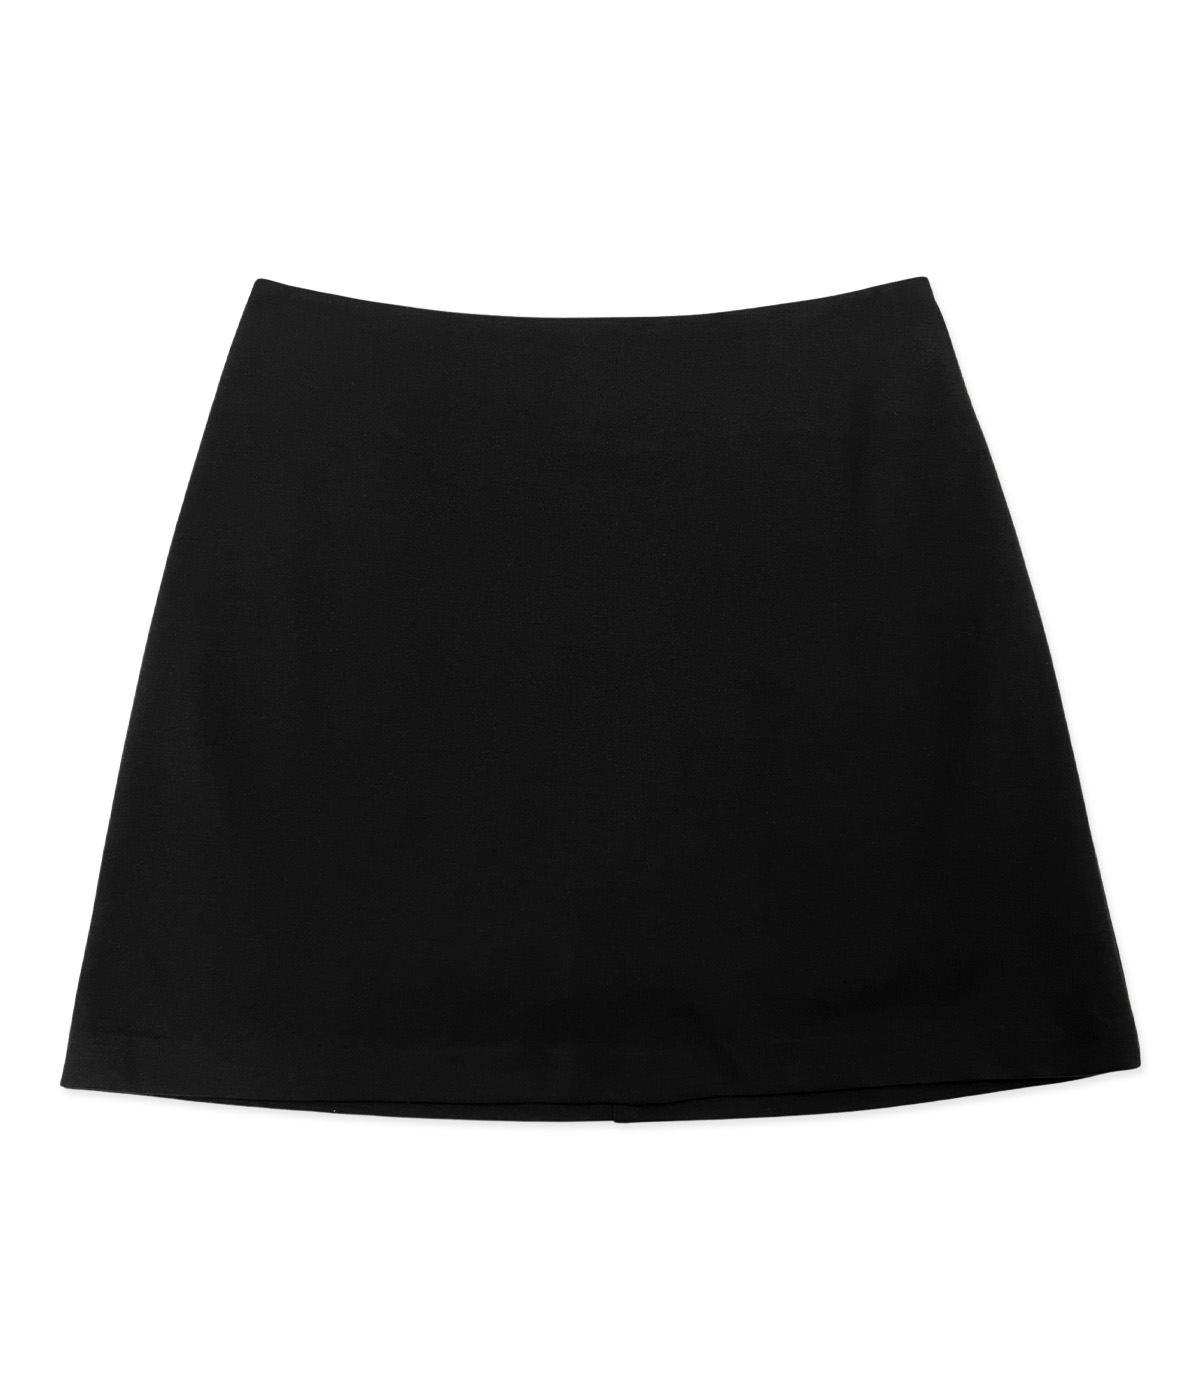 Classy Simple Skirt